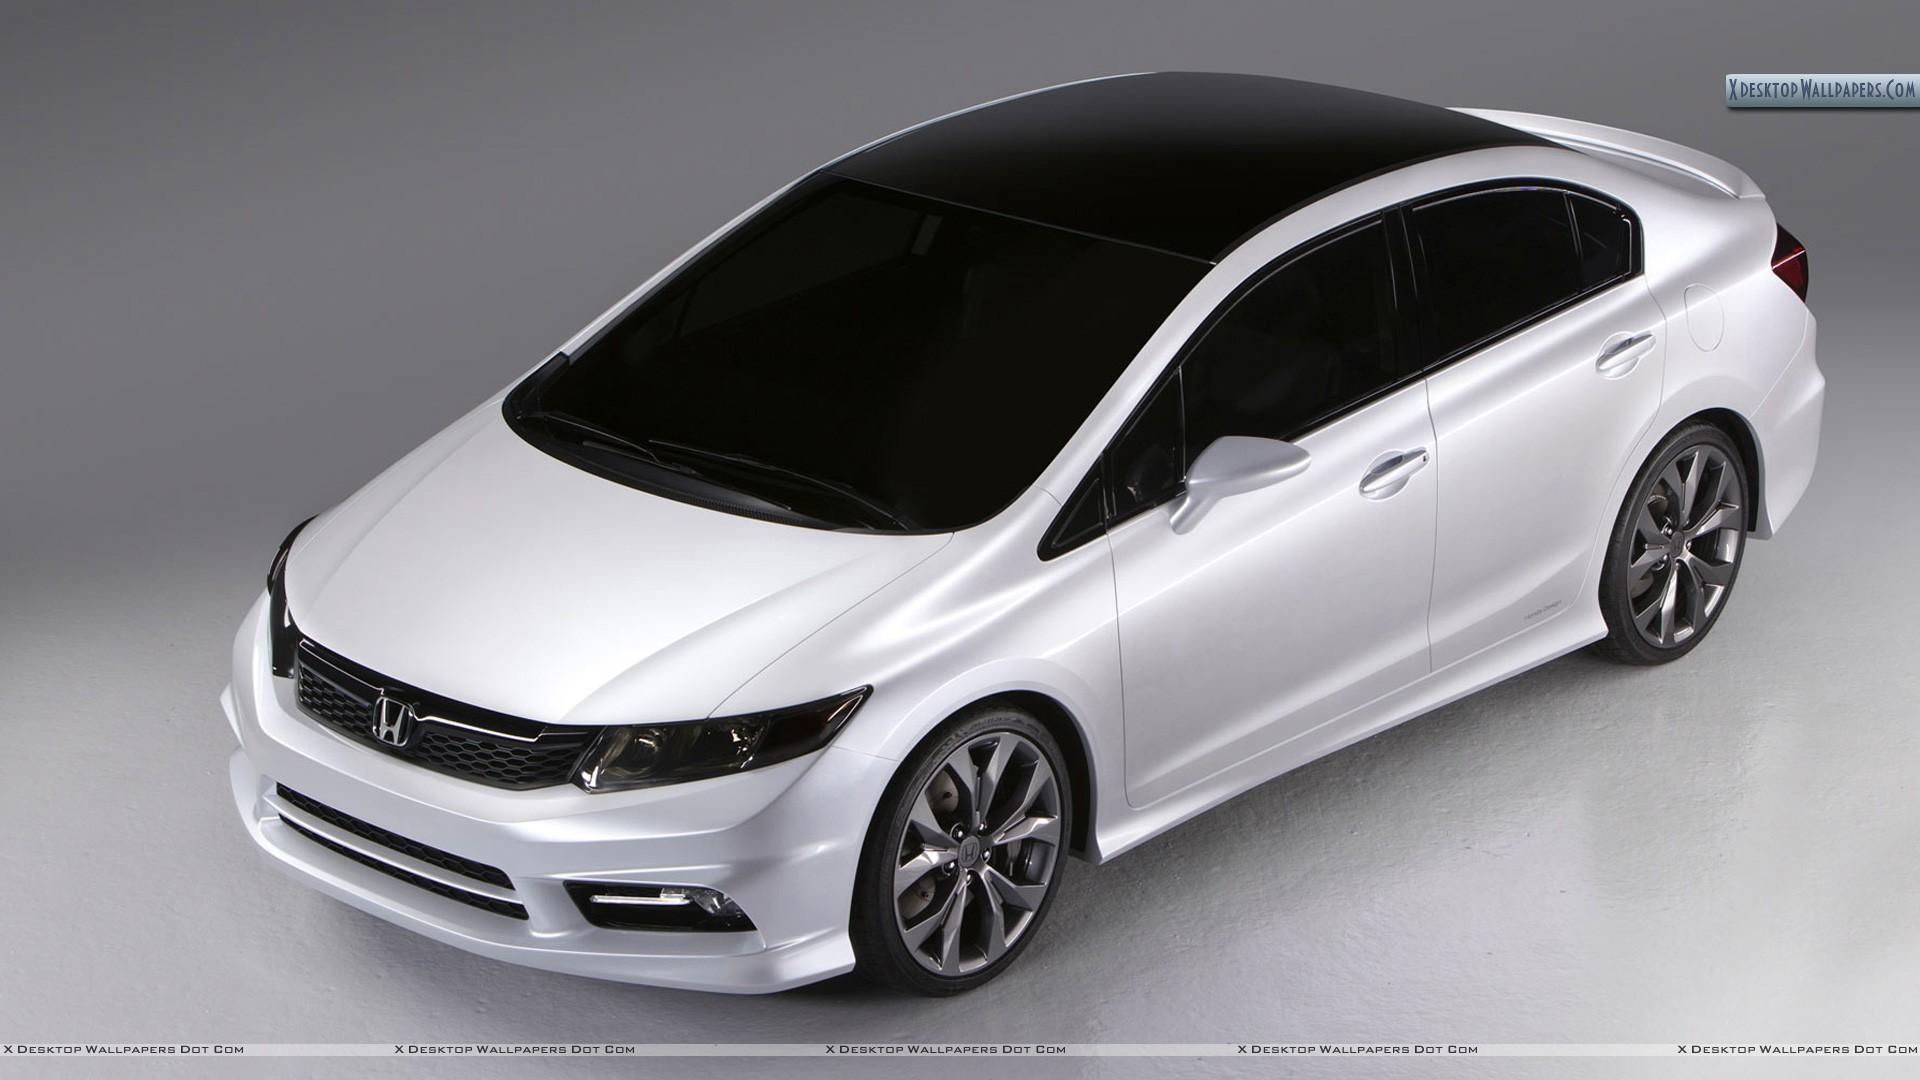 Black and White Honda Civic Logo - White Color Honda Civic Top Pose Wallpaper